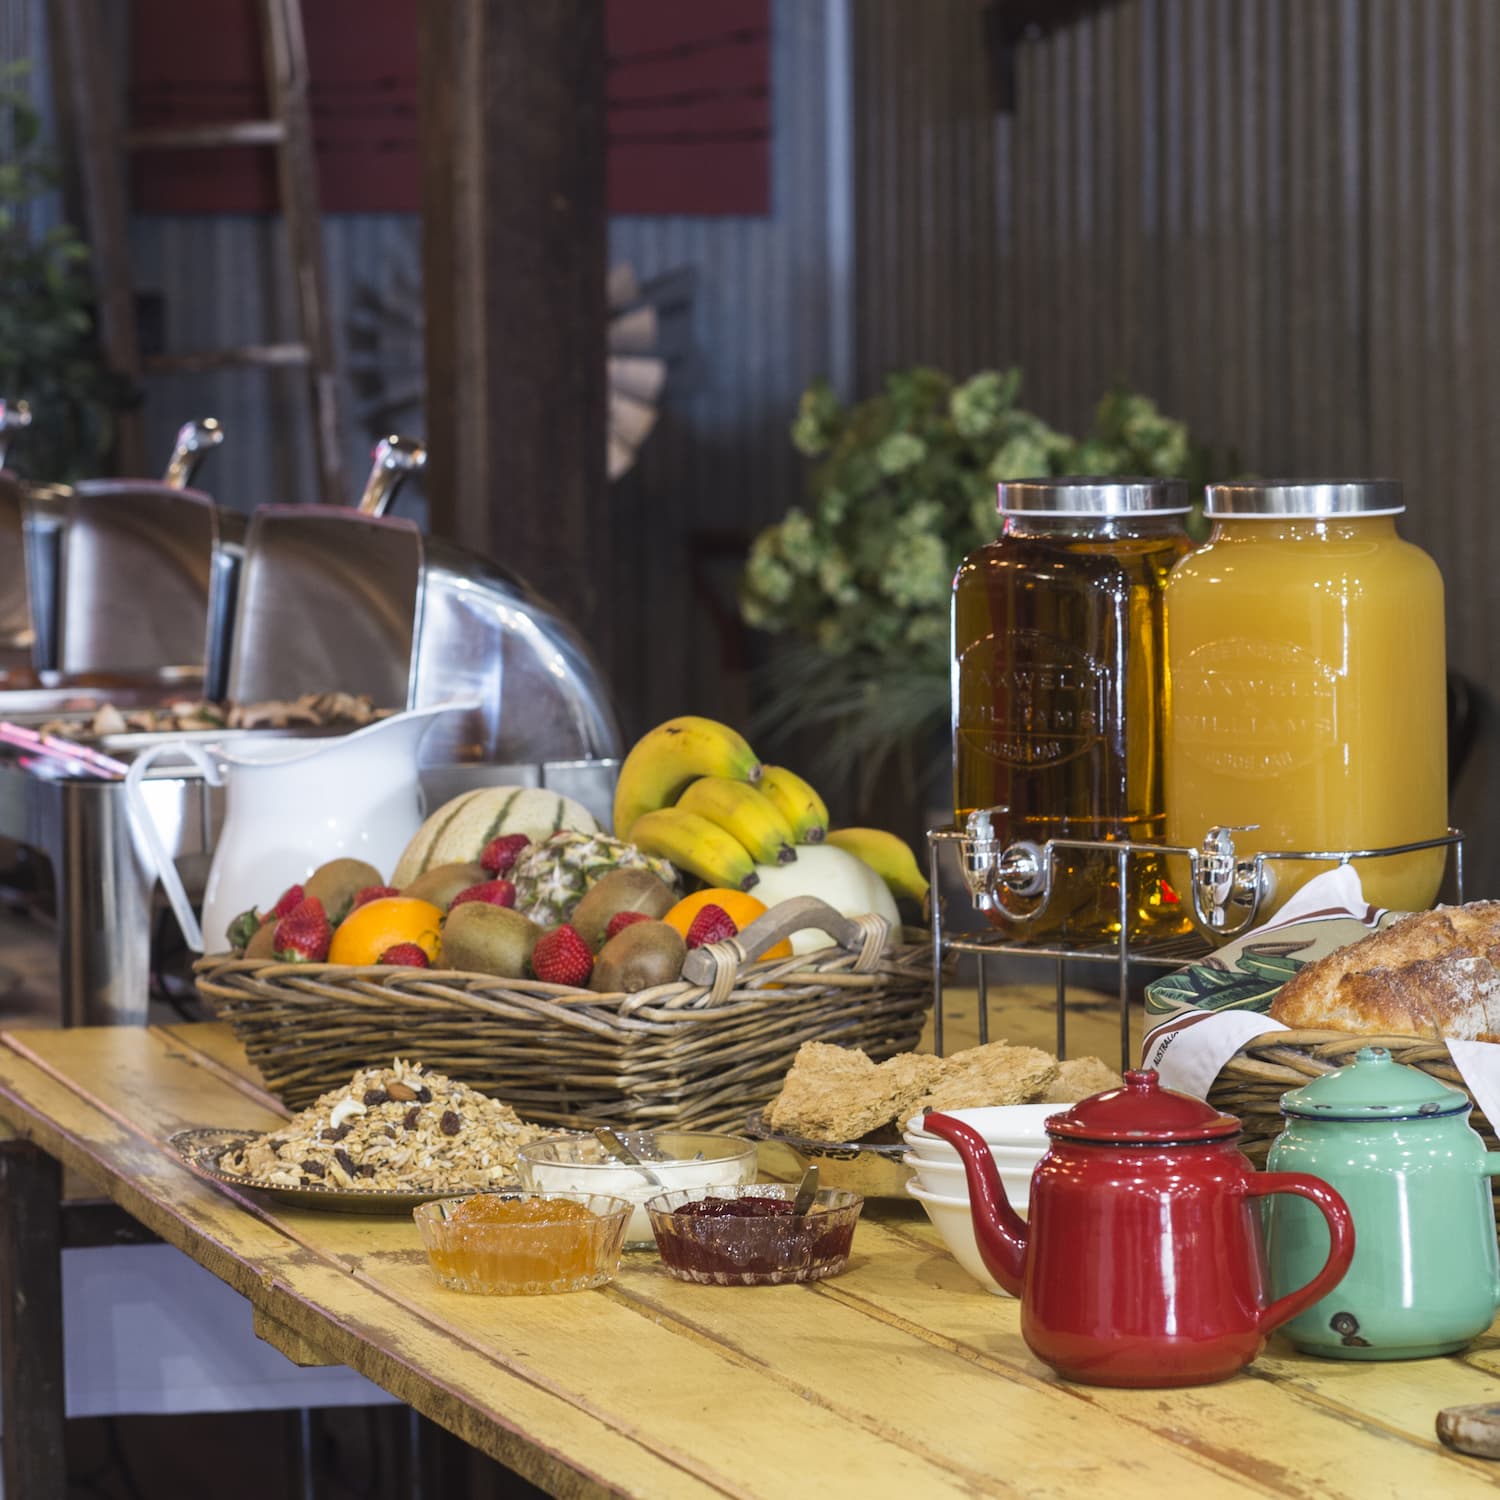 Country Buffet Breakfast table spread